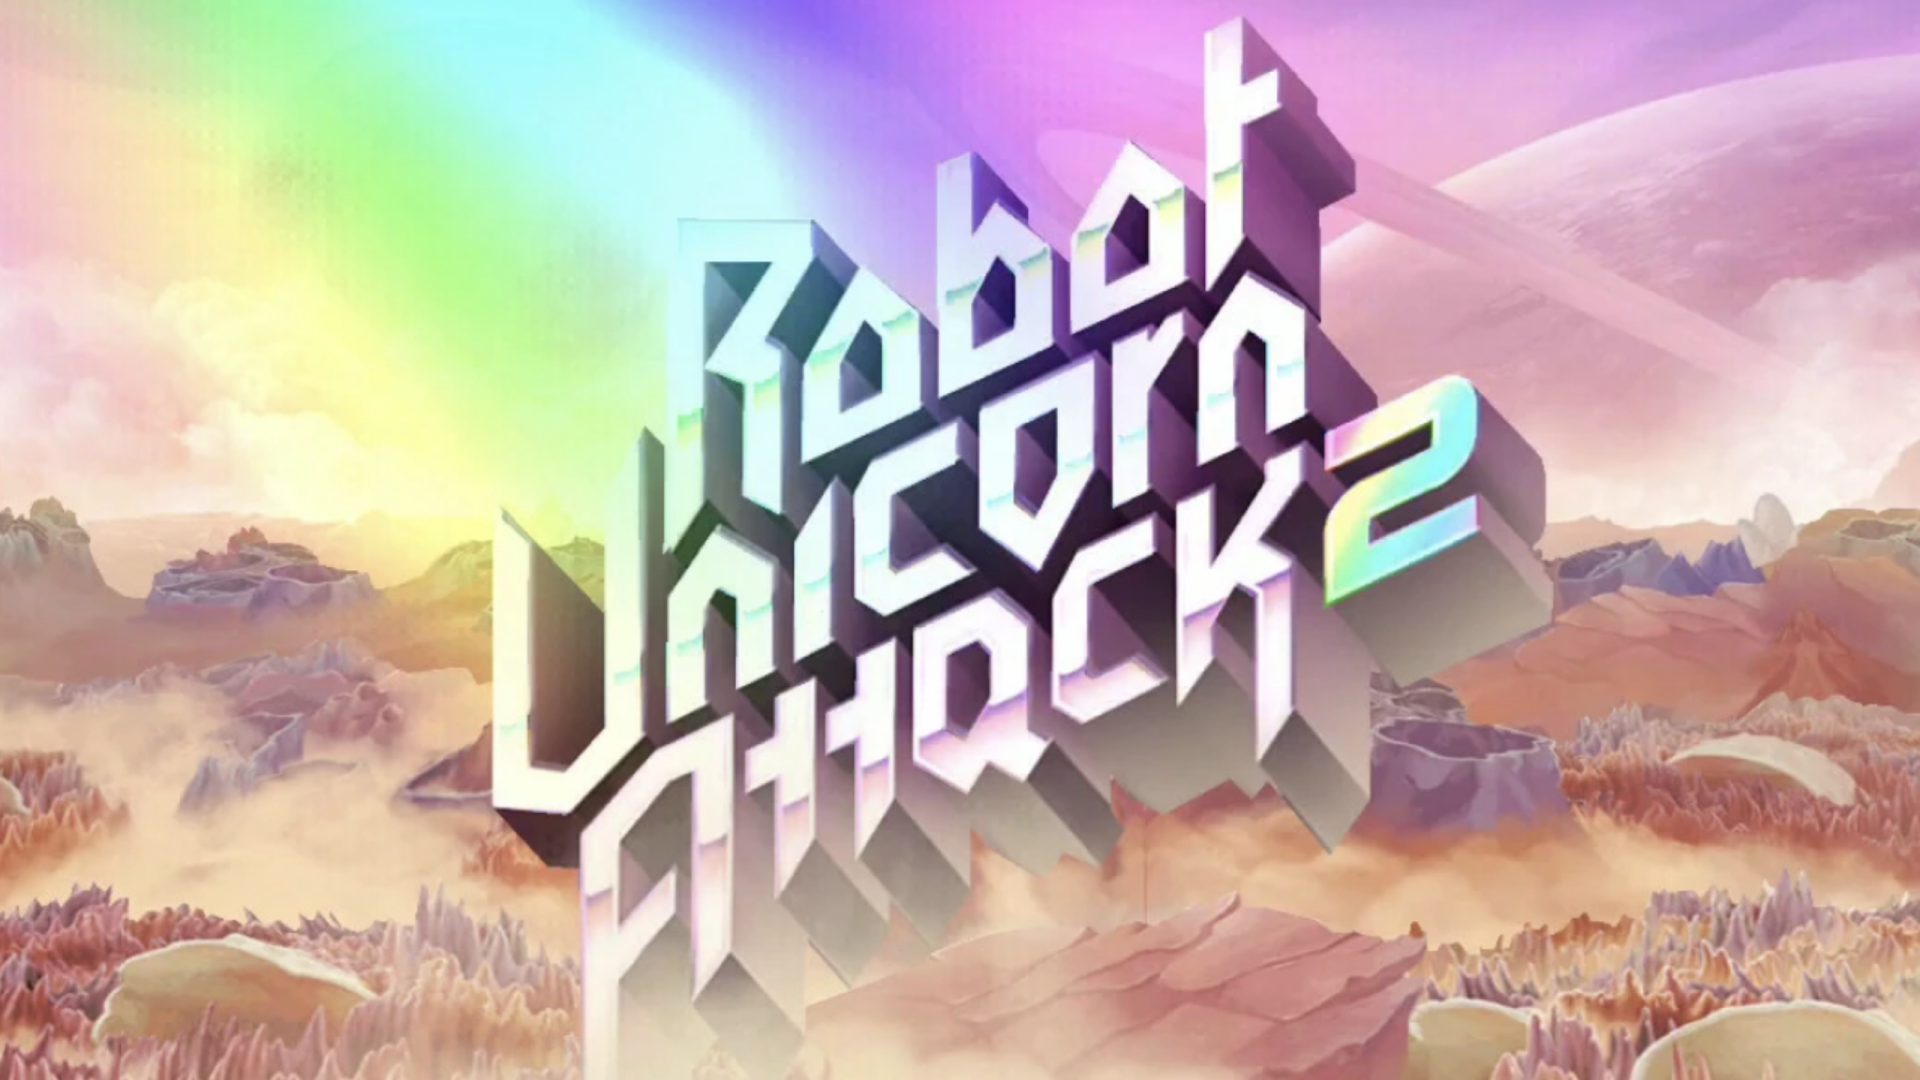 Robot Unicorn Attack 2